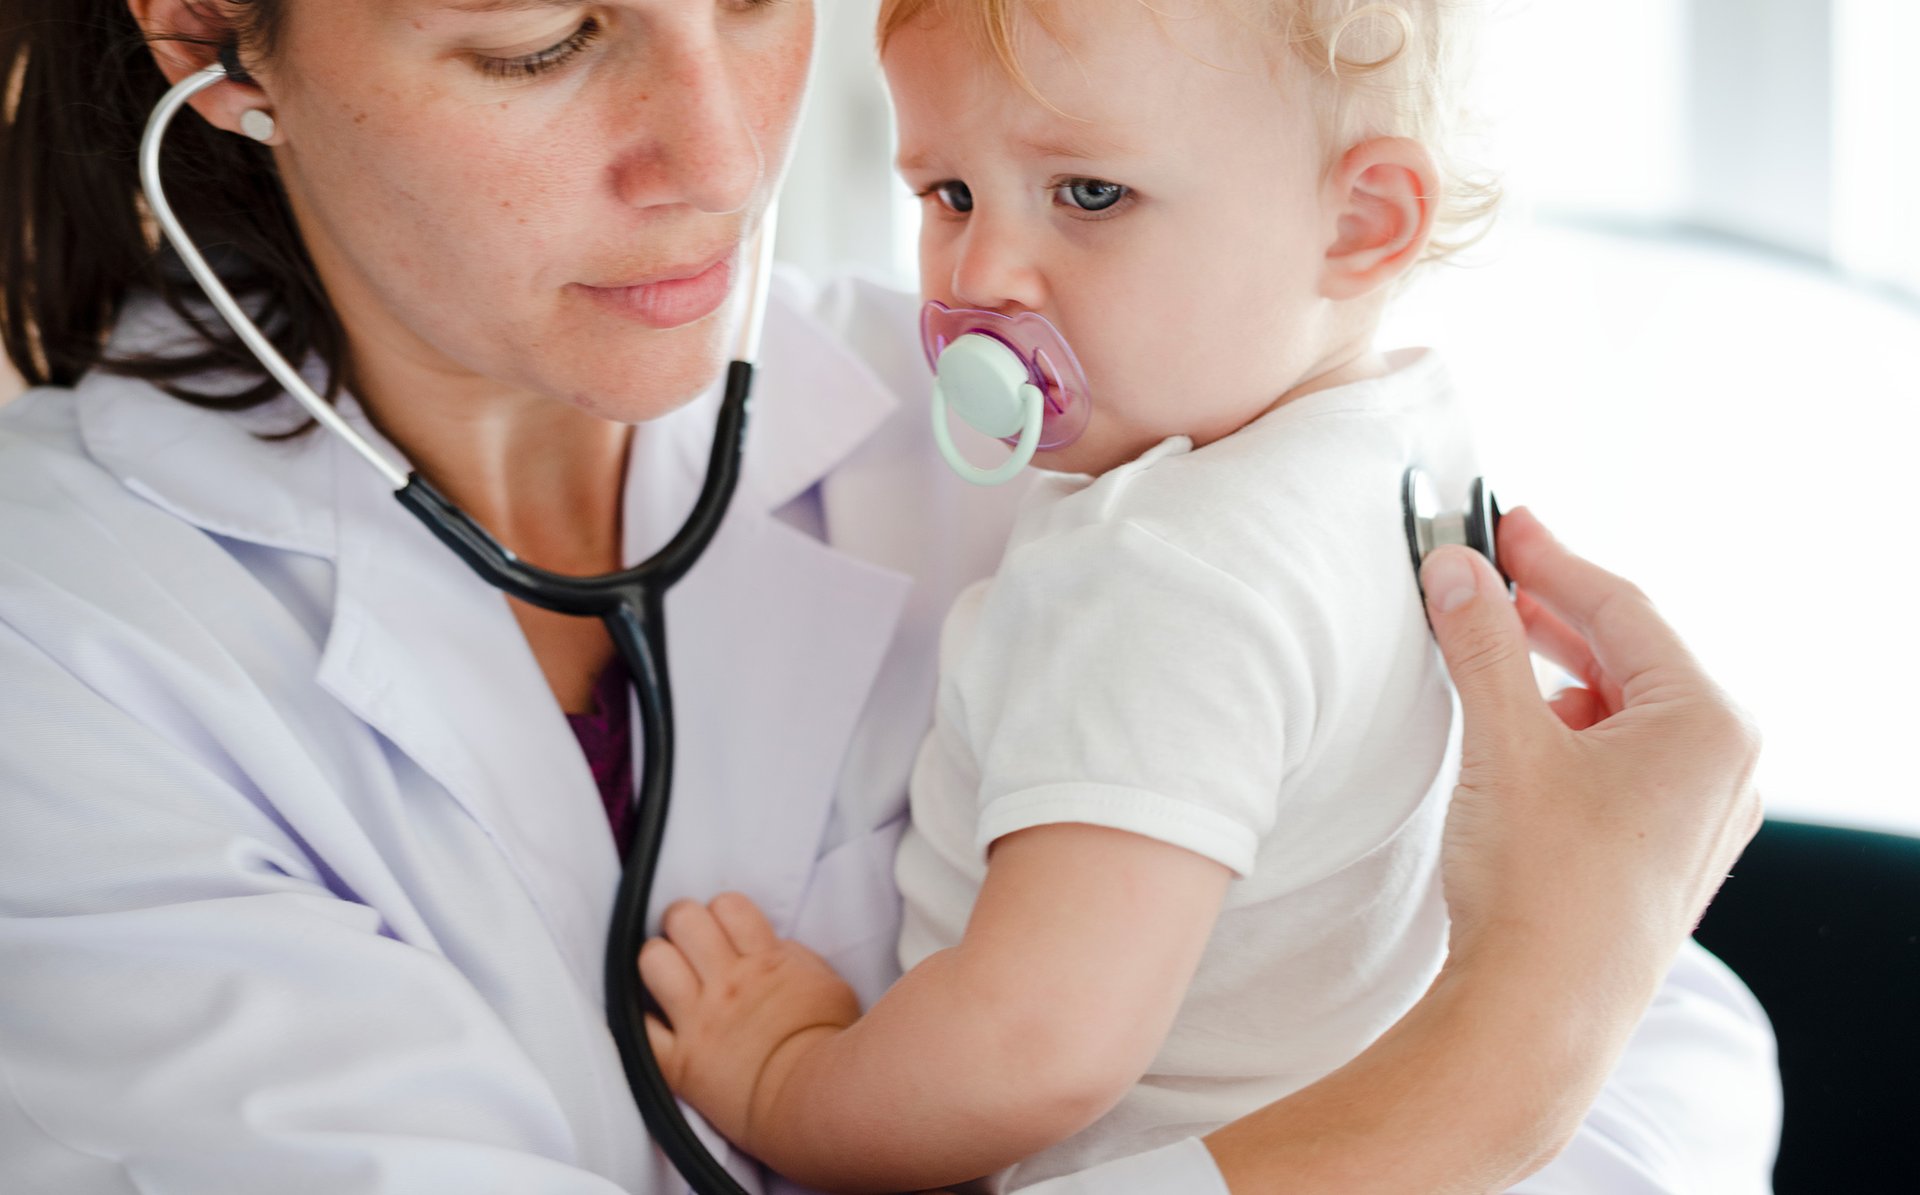 Pediatra bada dziecko stetoskopem